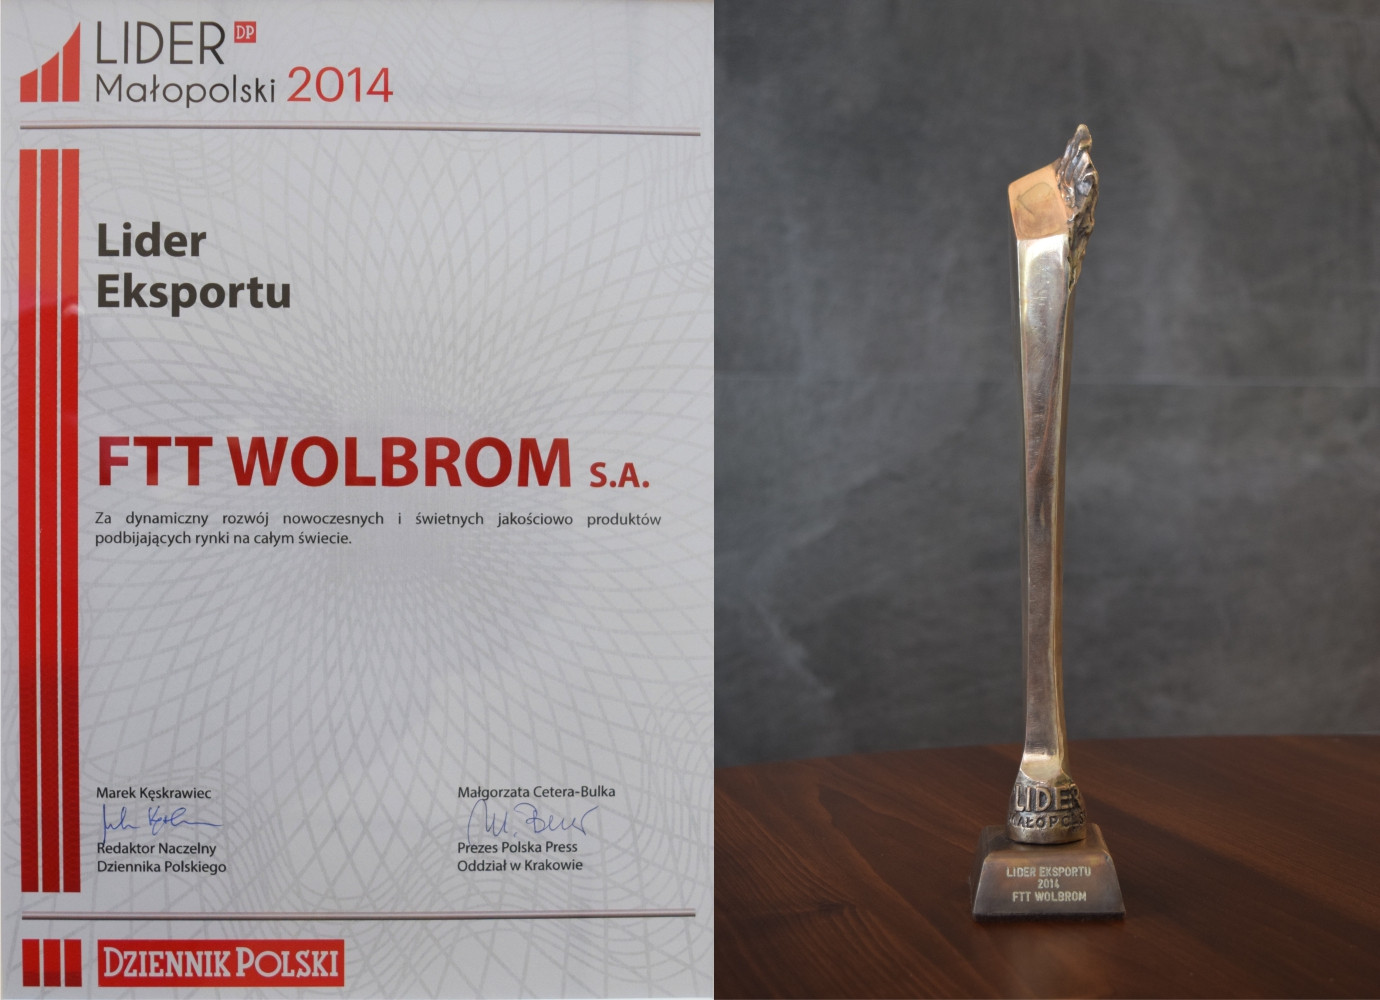 FTT Wolbrom S.A. laureatem konkursu „Lider Małopolski 2014”